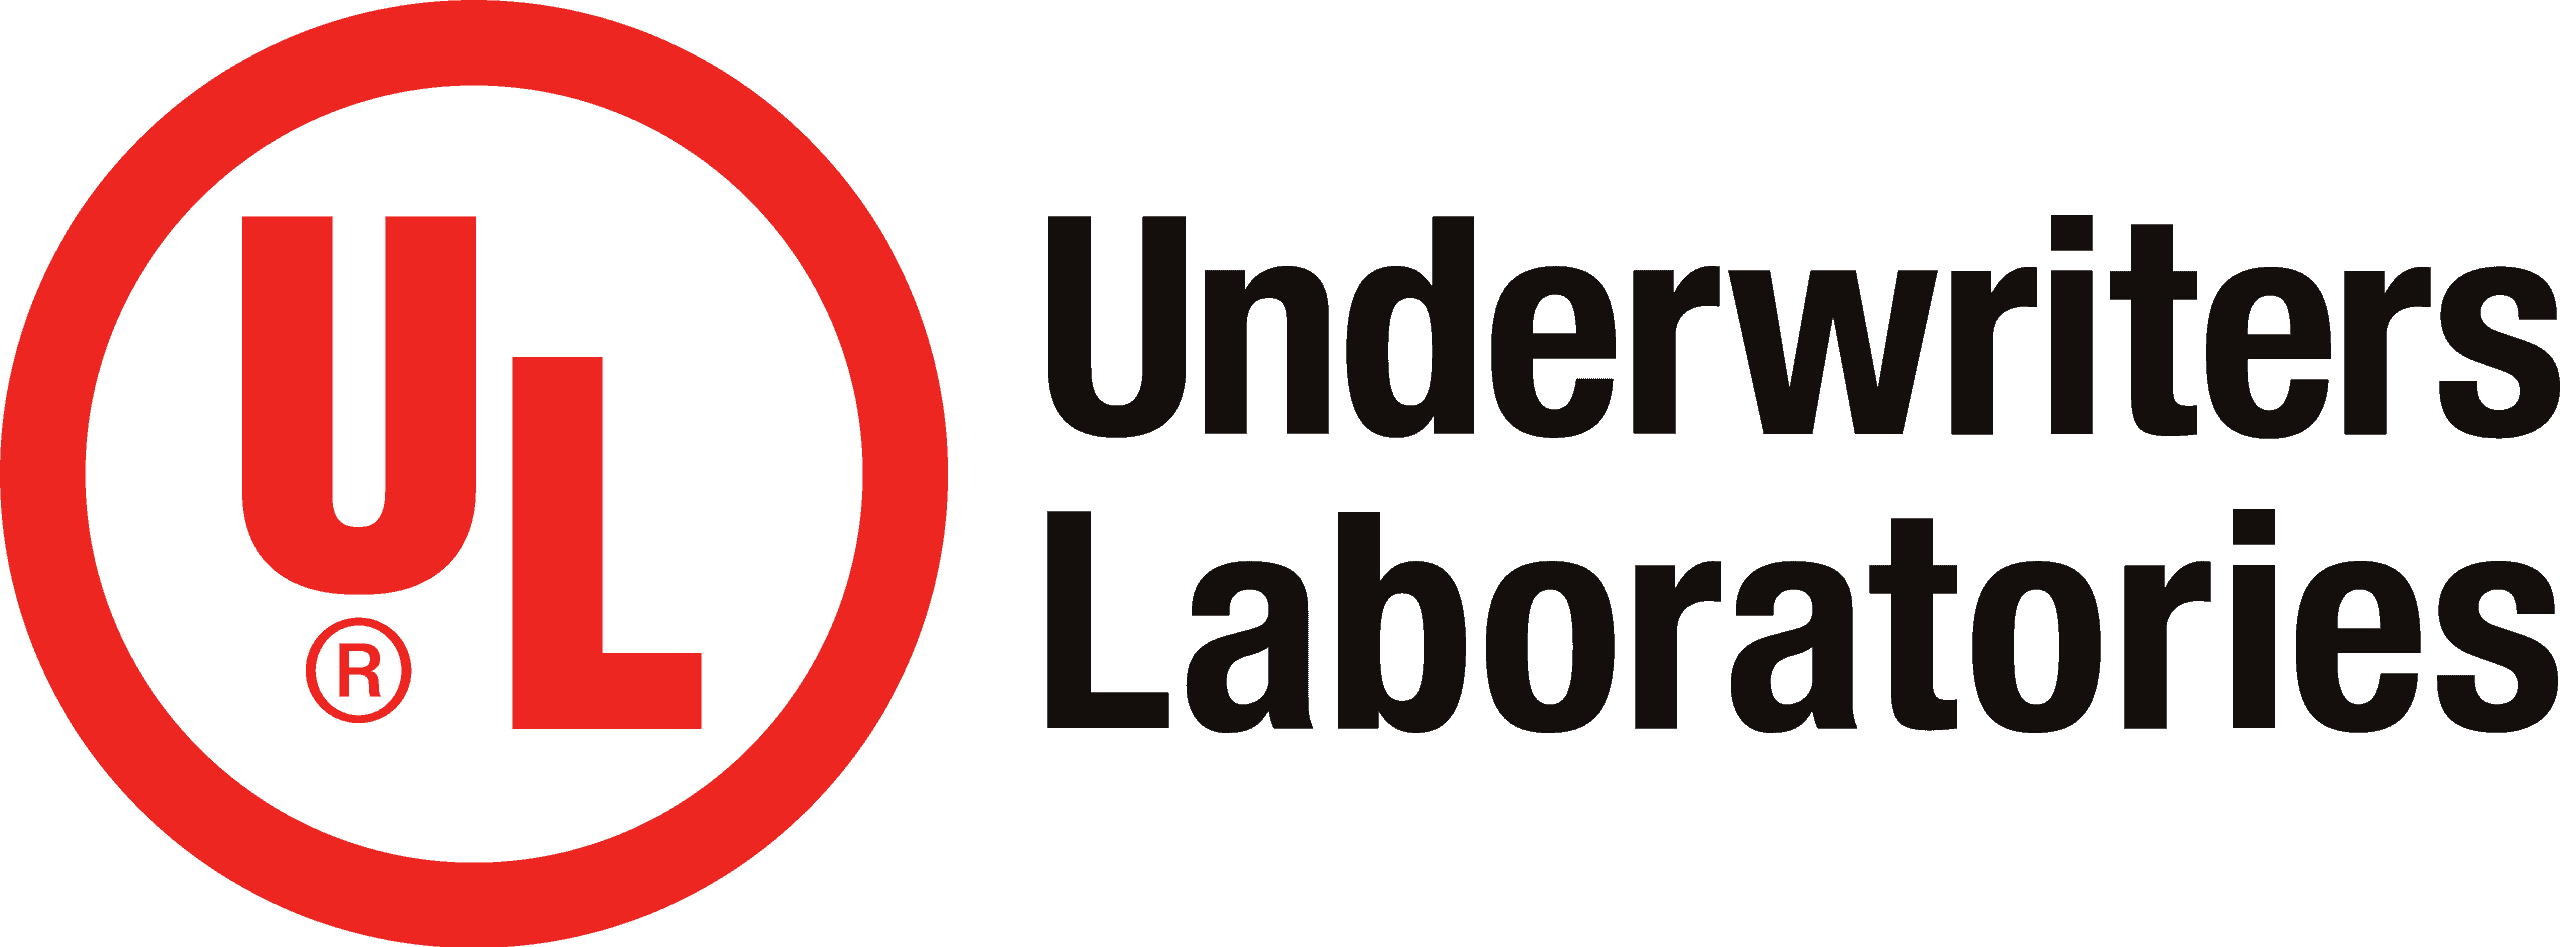 Underwriters Laboratories